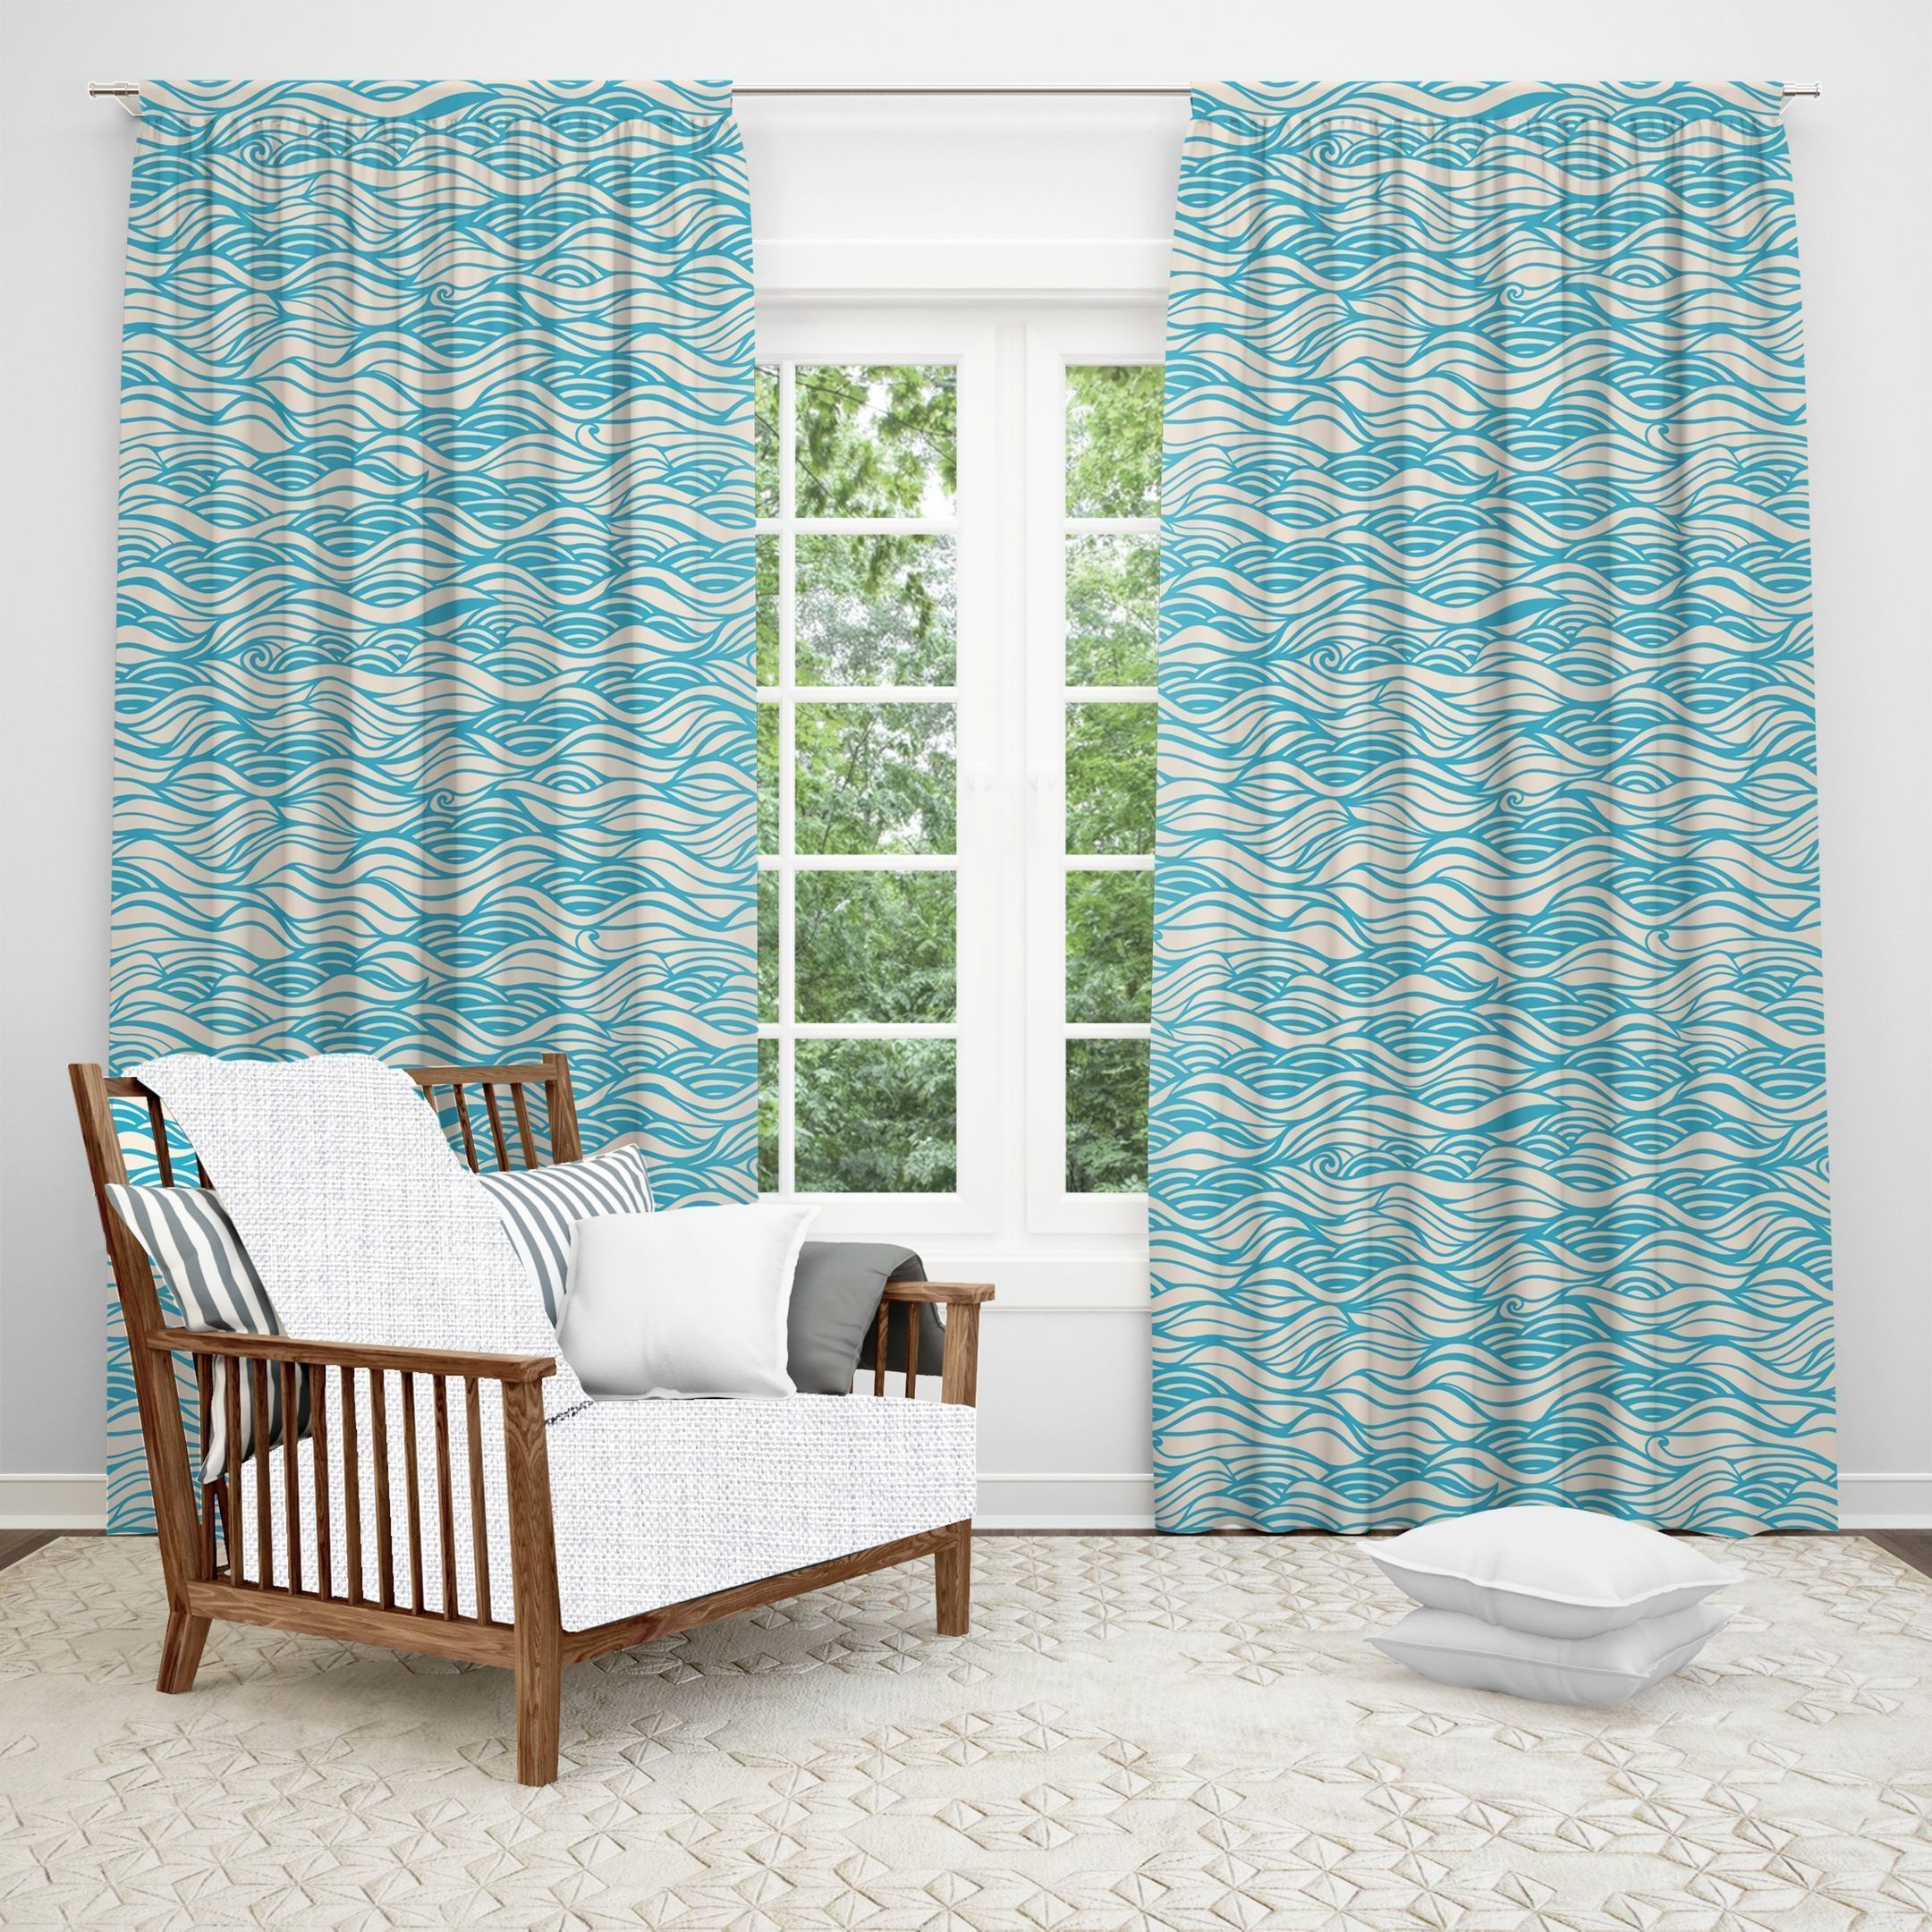 Beach Waves Blue And White Printed Window Curtain Home Decor